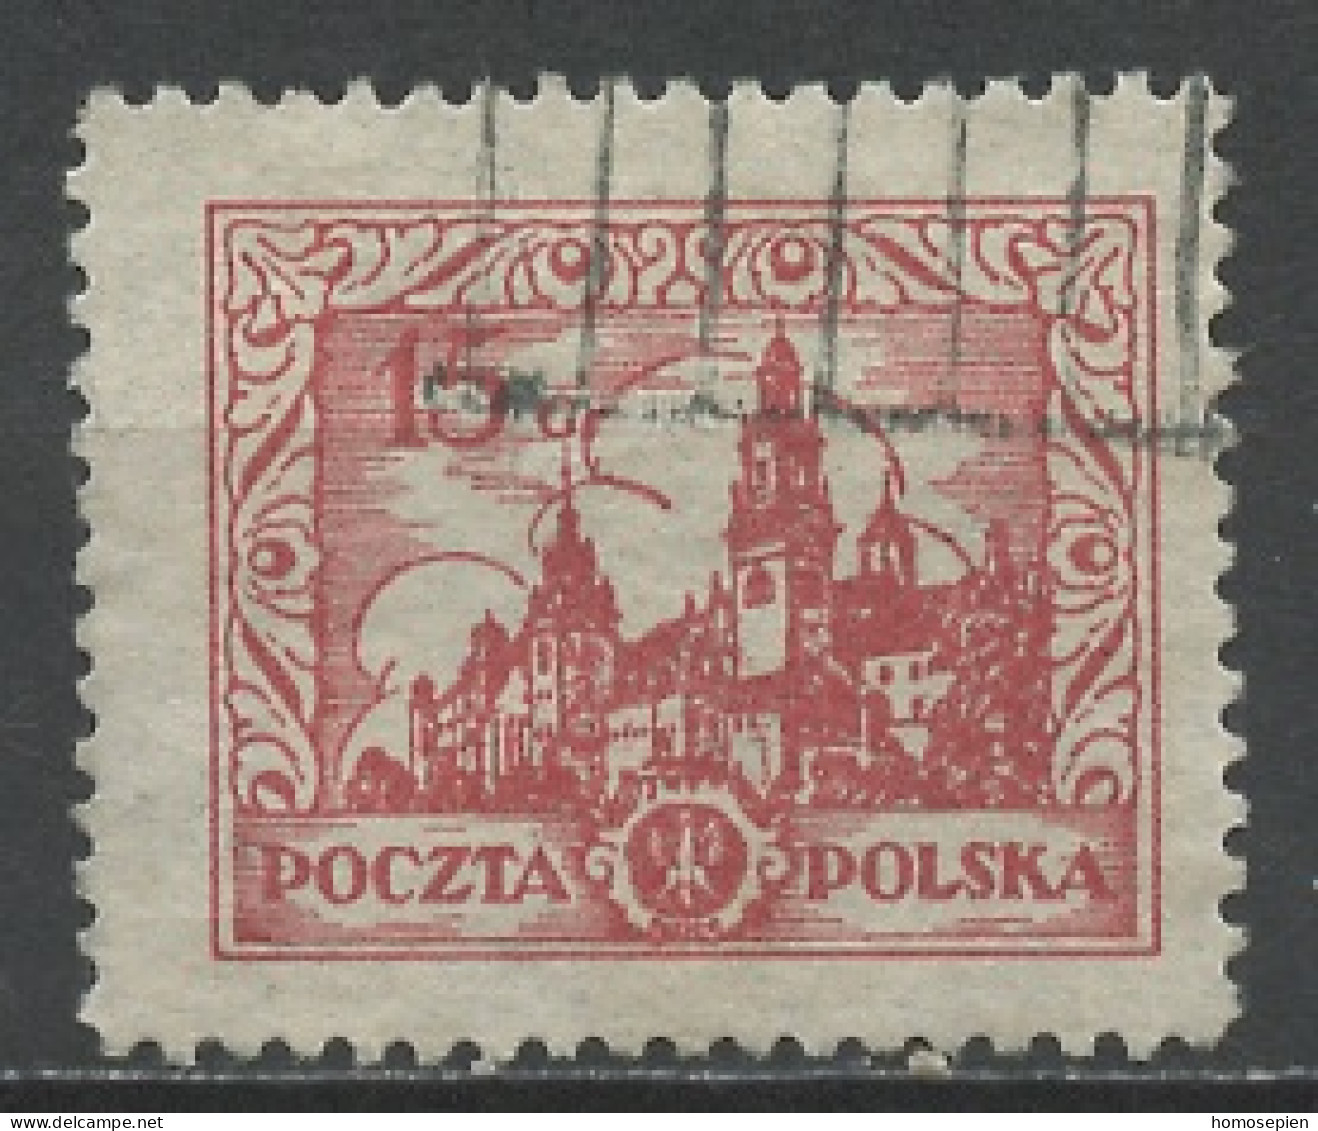 Pologne - Poland - Polen 1925-26 Y&T N°315 - Michel N°238 (o) - 15g Château De Wawel - K11,5 - Oblitérés